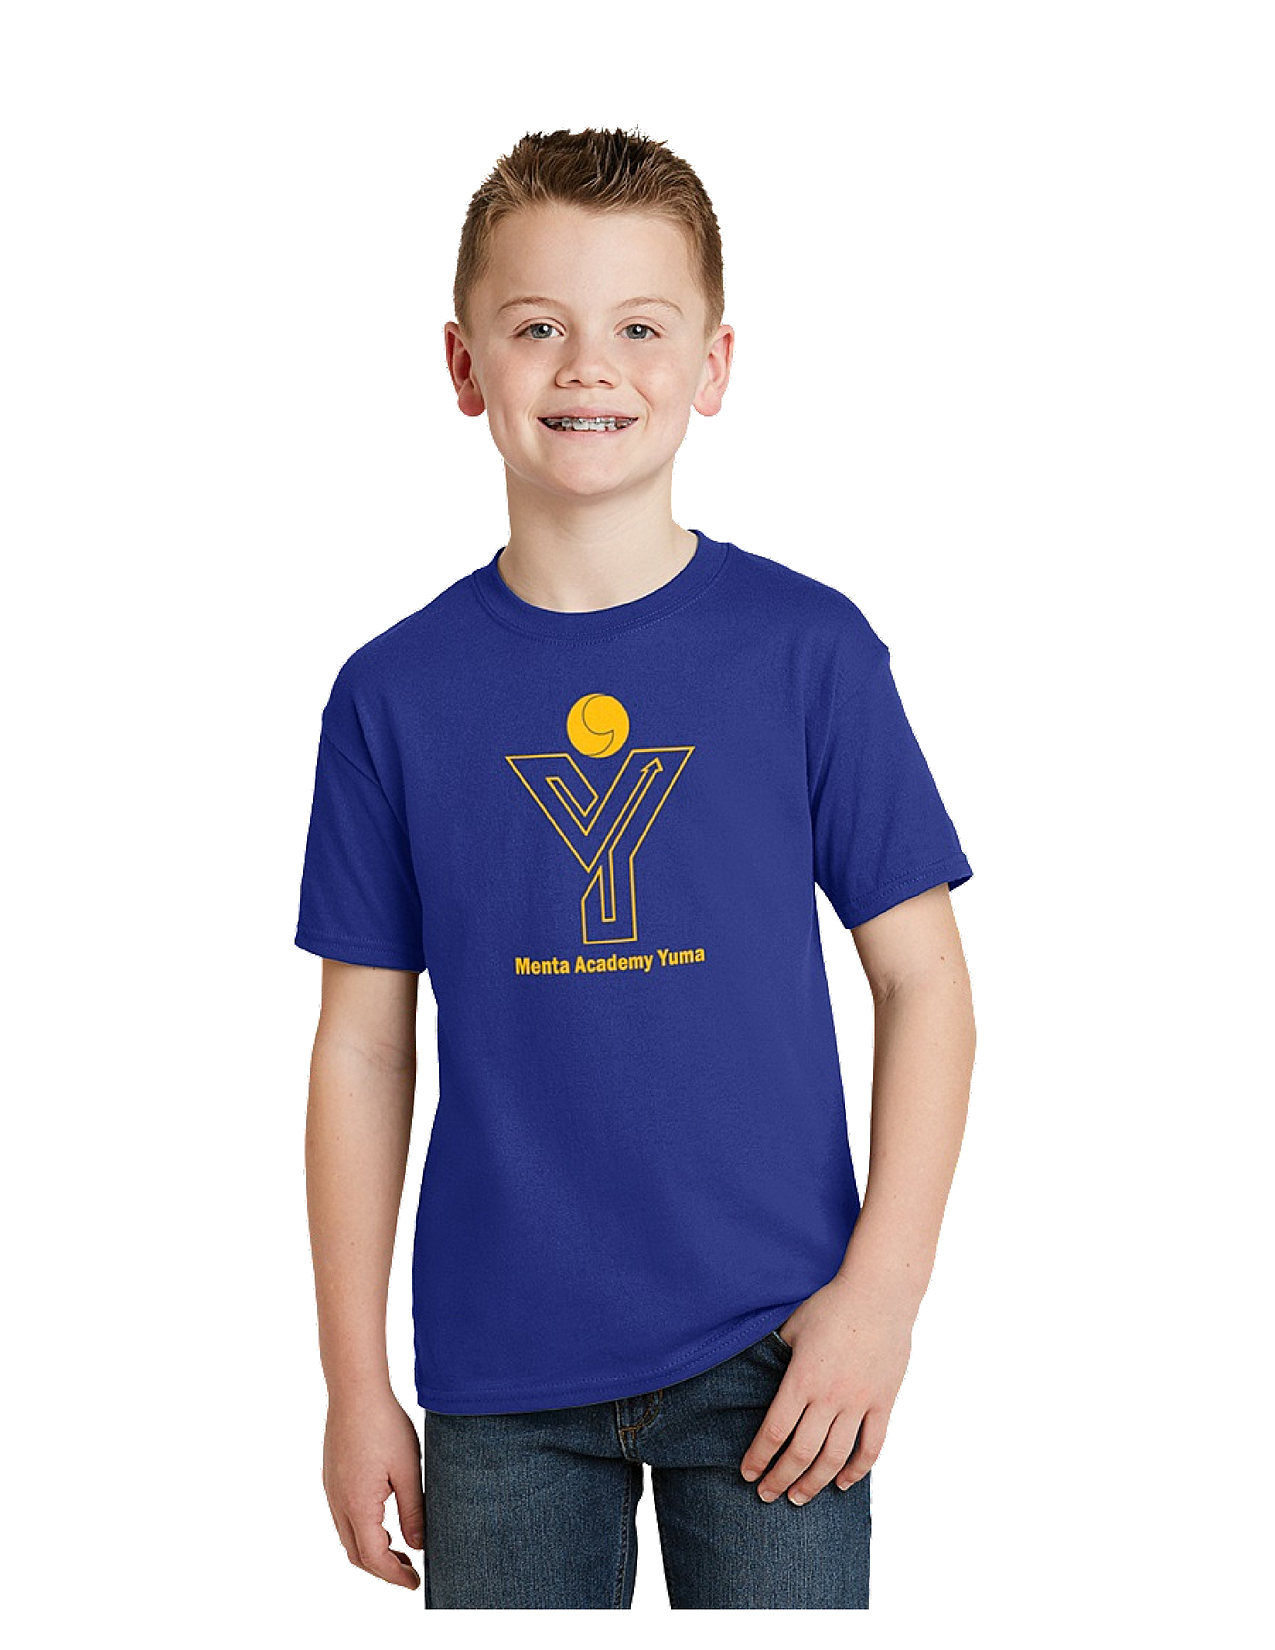 HanesÂ® - EcoSmartÂ® School Spirit Shirt - Youth - MAY (Size: YSM - Size 6/7, Color: Royal Blue)